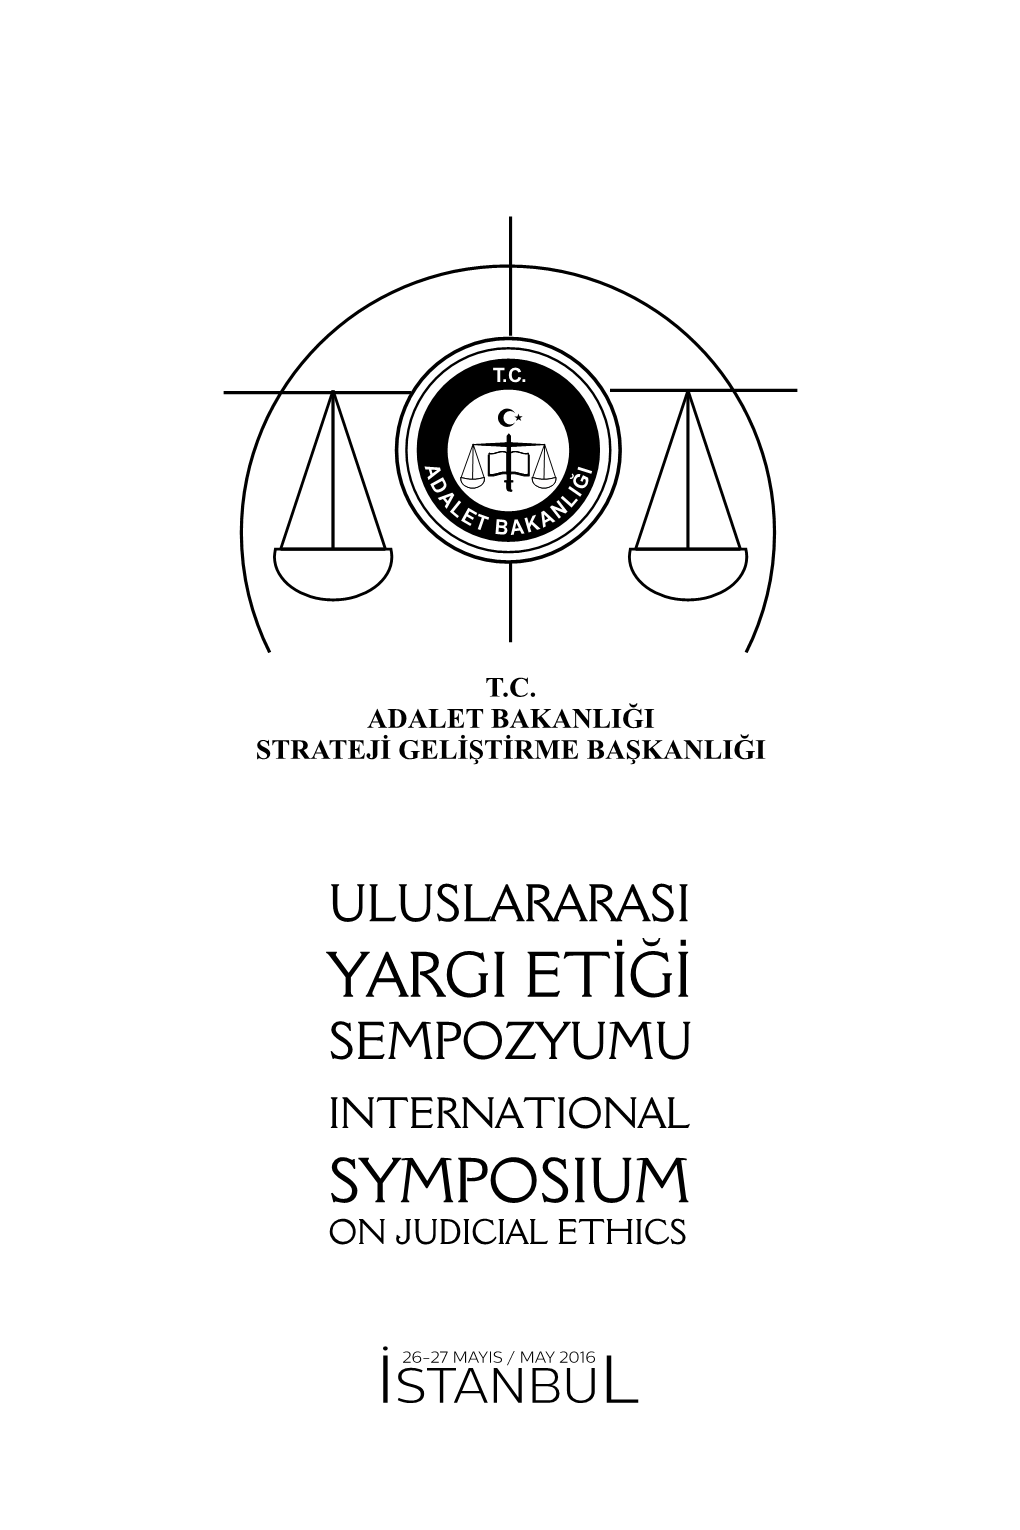 YARGI ETİĞİ SEMPOZYUMU INTERNATIONAL SYMPOSIUM on JUDICIAL ETHICS ULUSLARARASI YARGI ETİĞİ SEMPOZYUMU International Symposium on Judicial Ethics